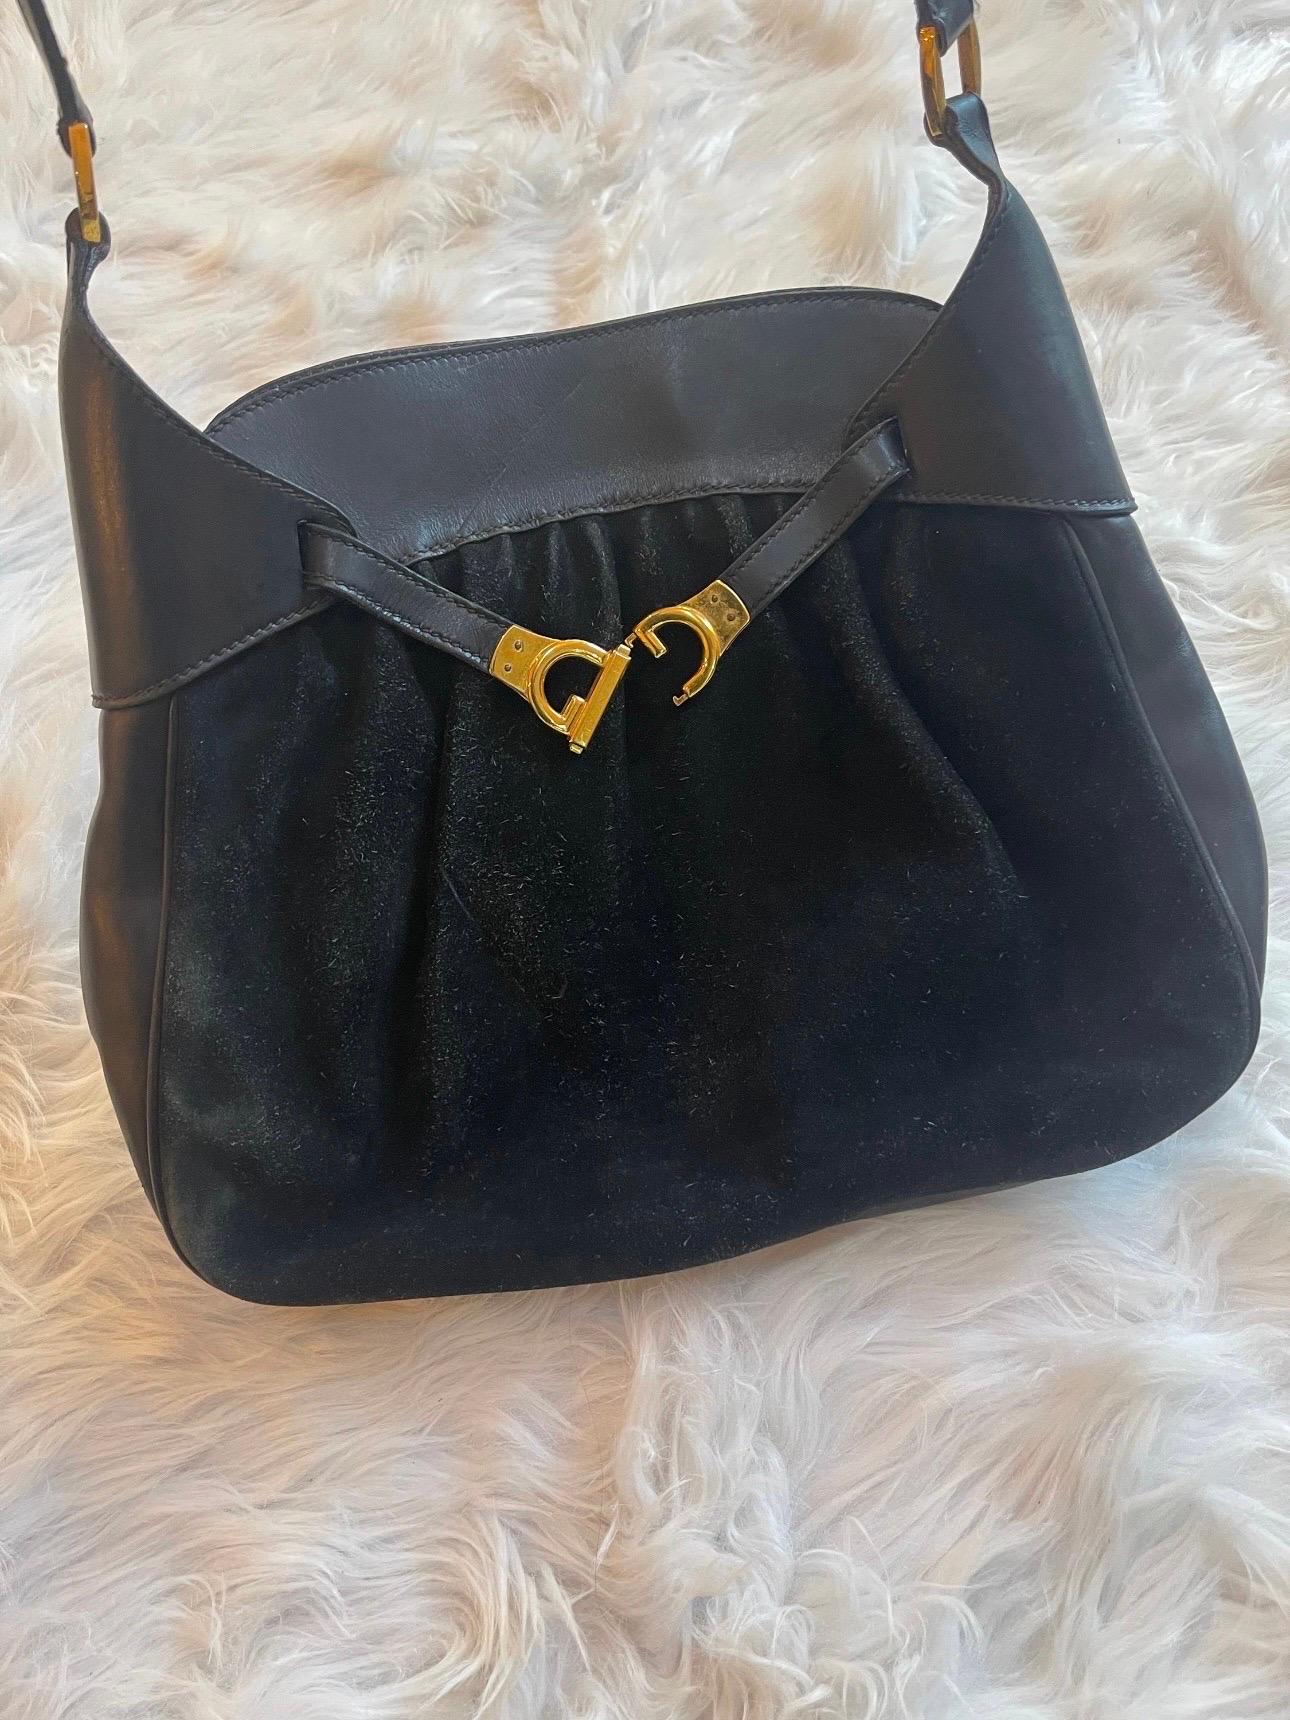 Vintage GUCCI Black Suede Leather GG Gold tone logo Hobo Bag Crossbody Purse Bag For Sale 2